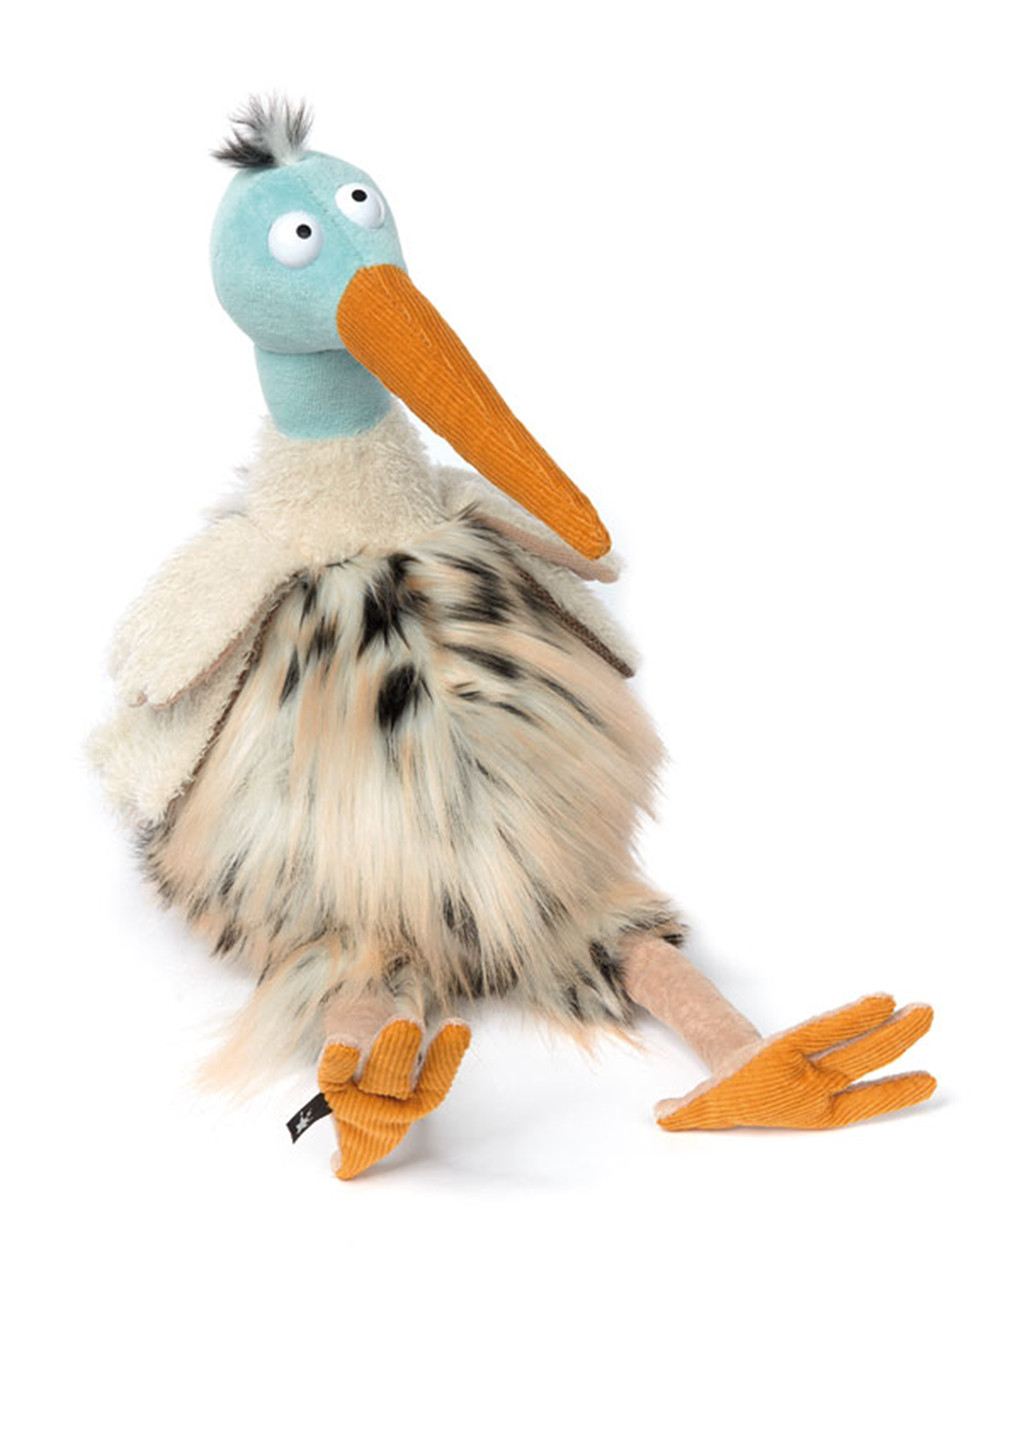 М'яка іграшка Райський птах Пол, 15х14х30 см Sigikid (186242938)